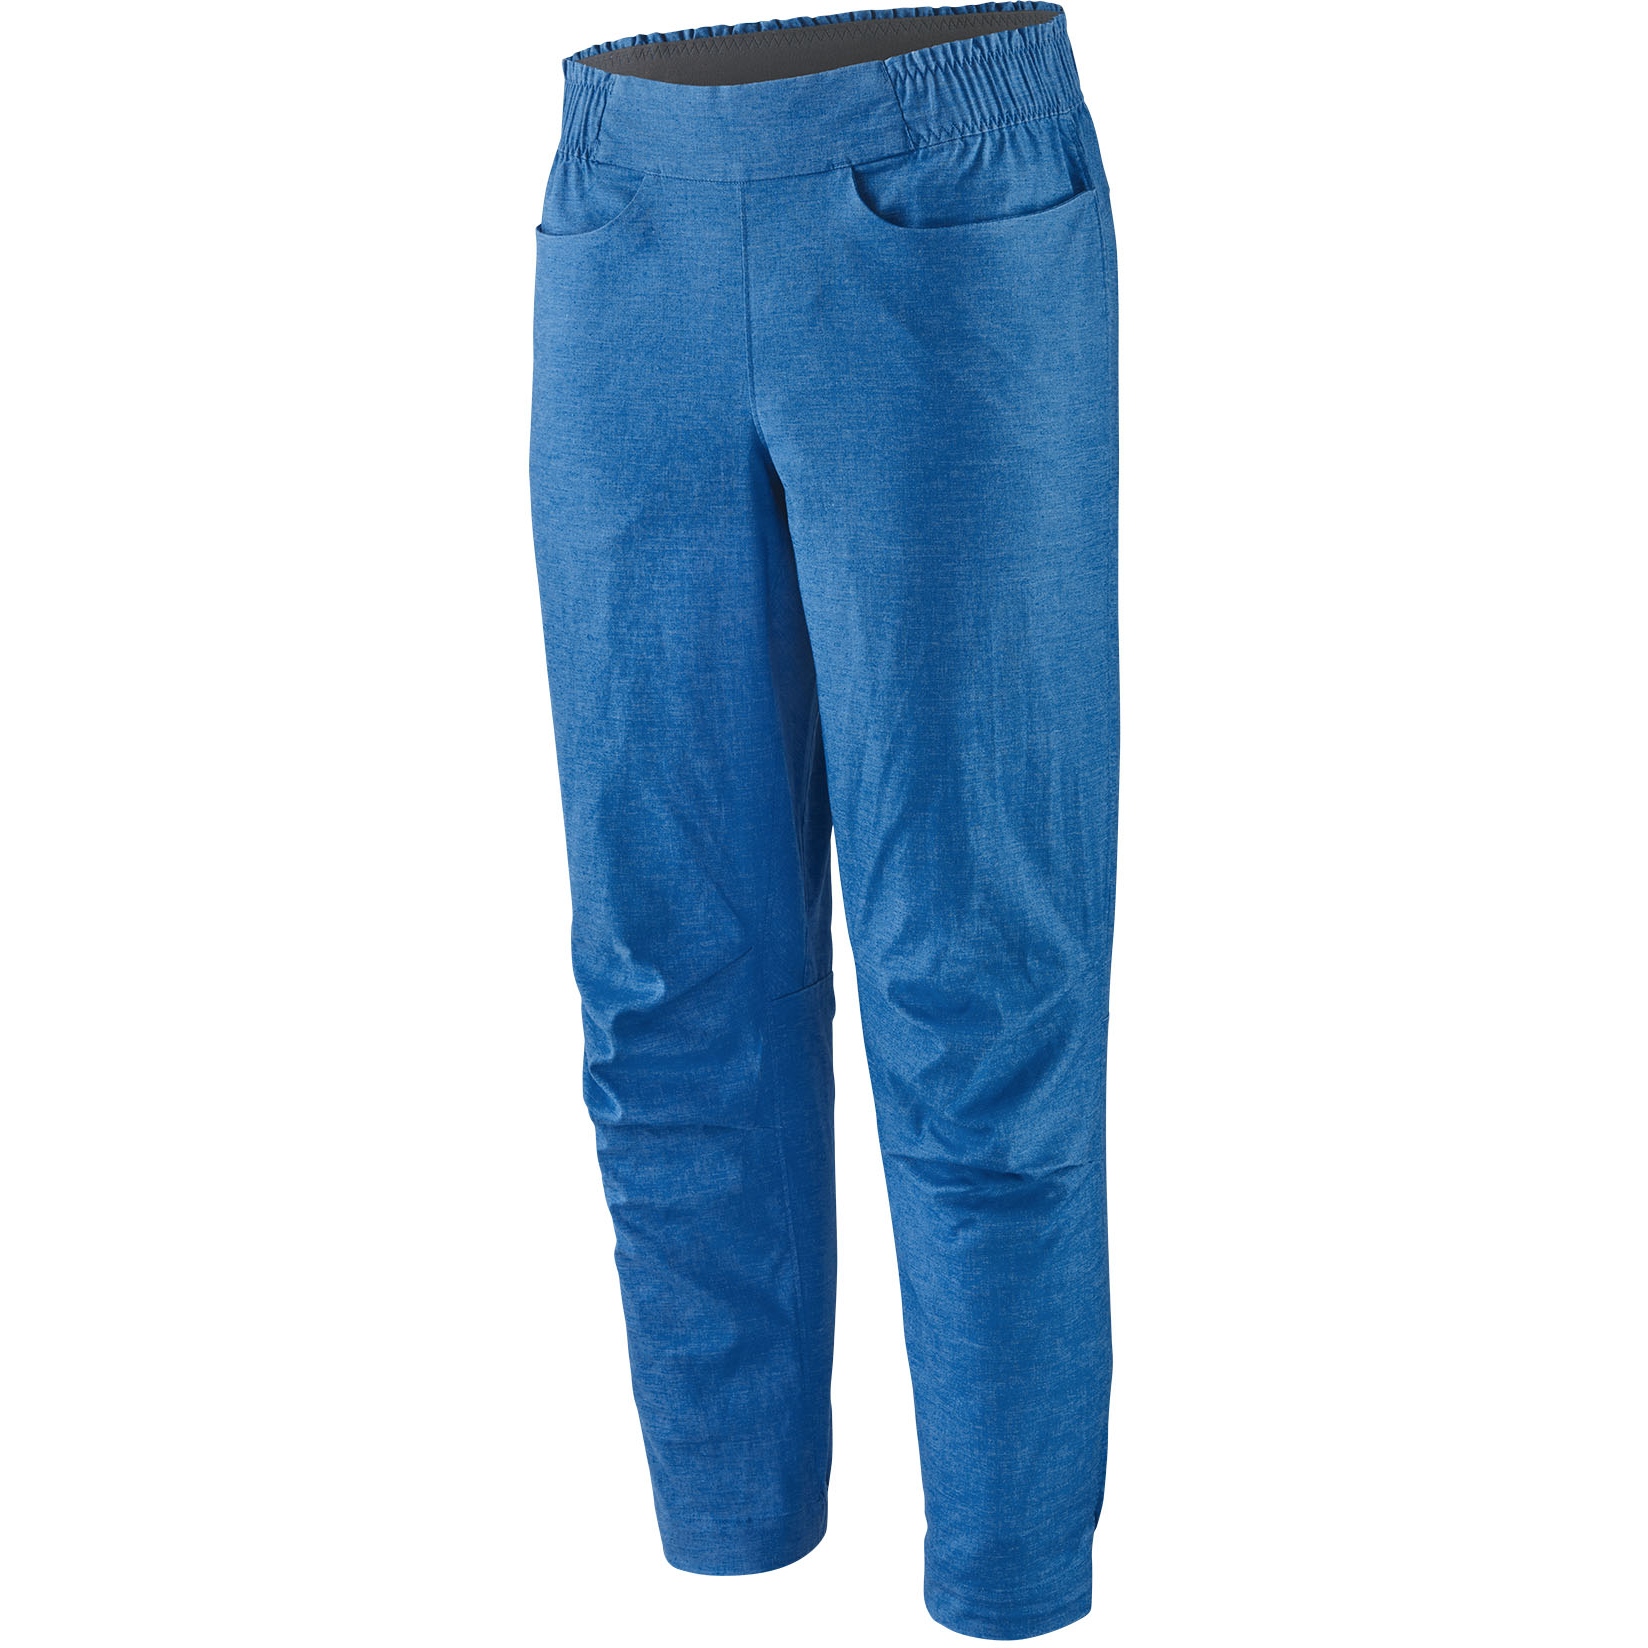 PATAGONIA-M'S HAMPI ROCK PANTS REG ENDLESS BLUE - Climbing trousers